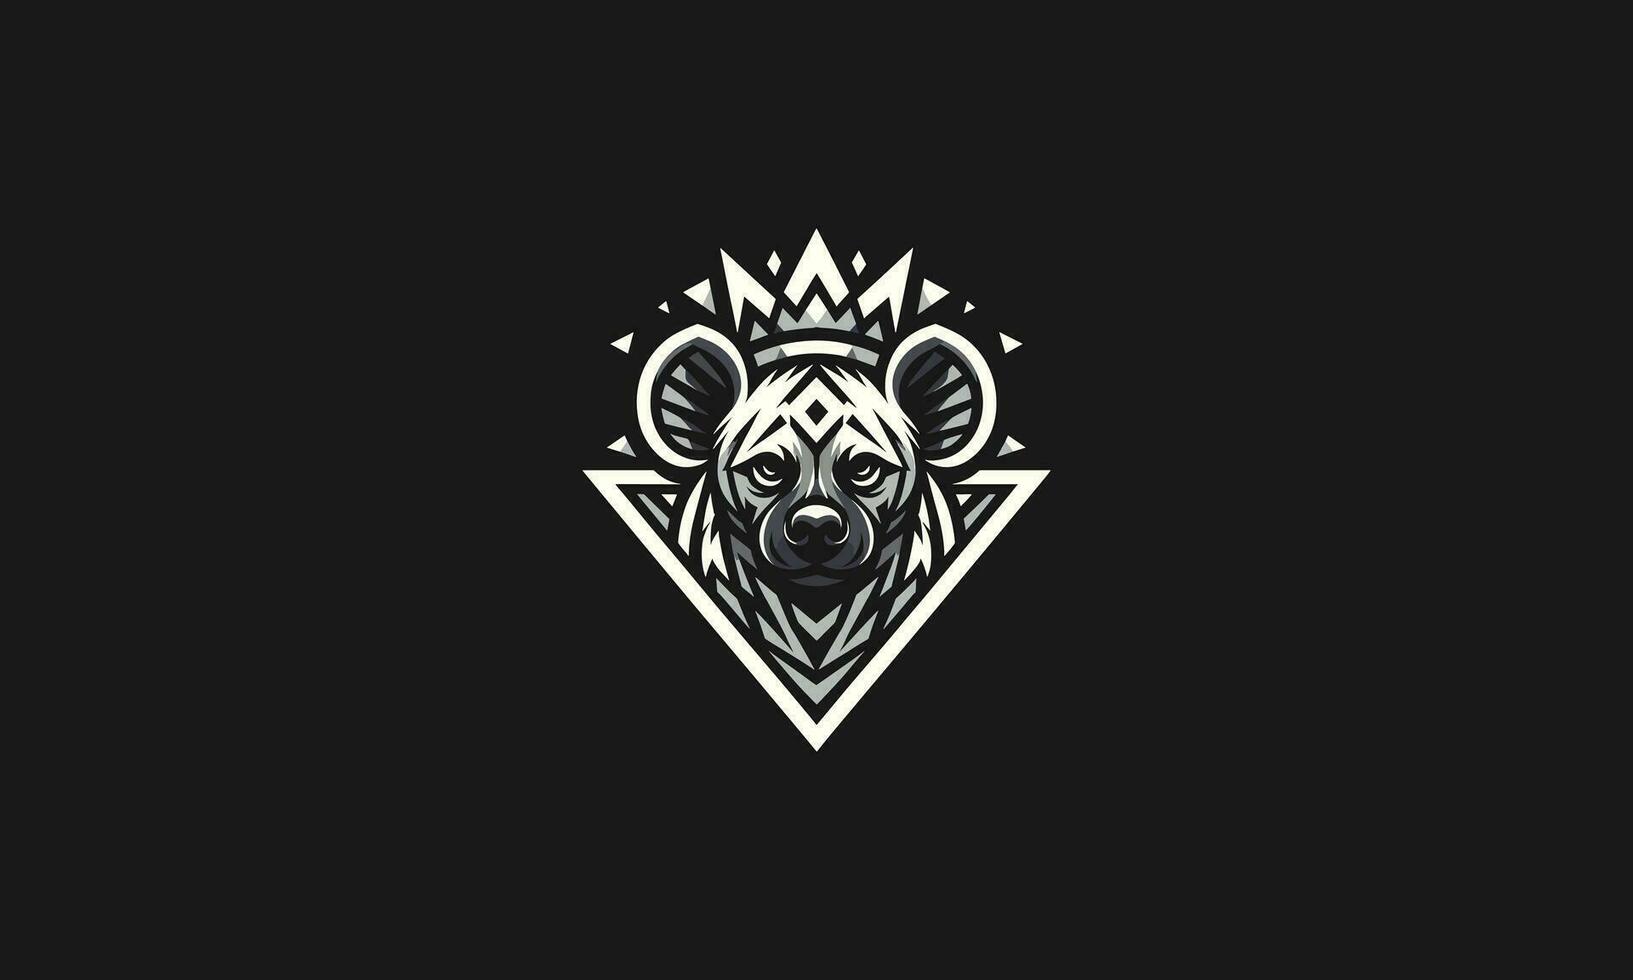 head hyena wearing crown vector mascot design